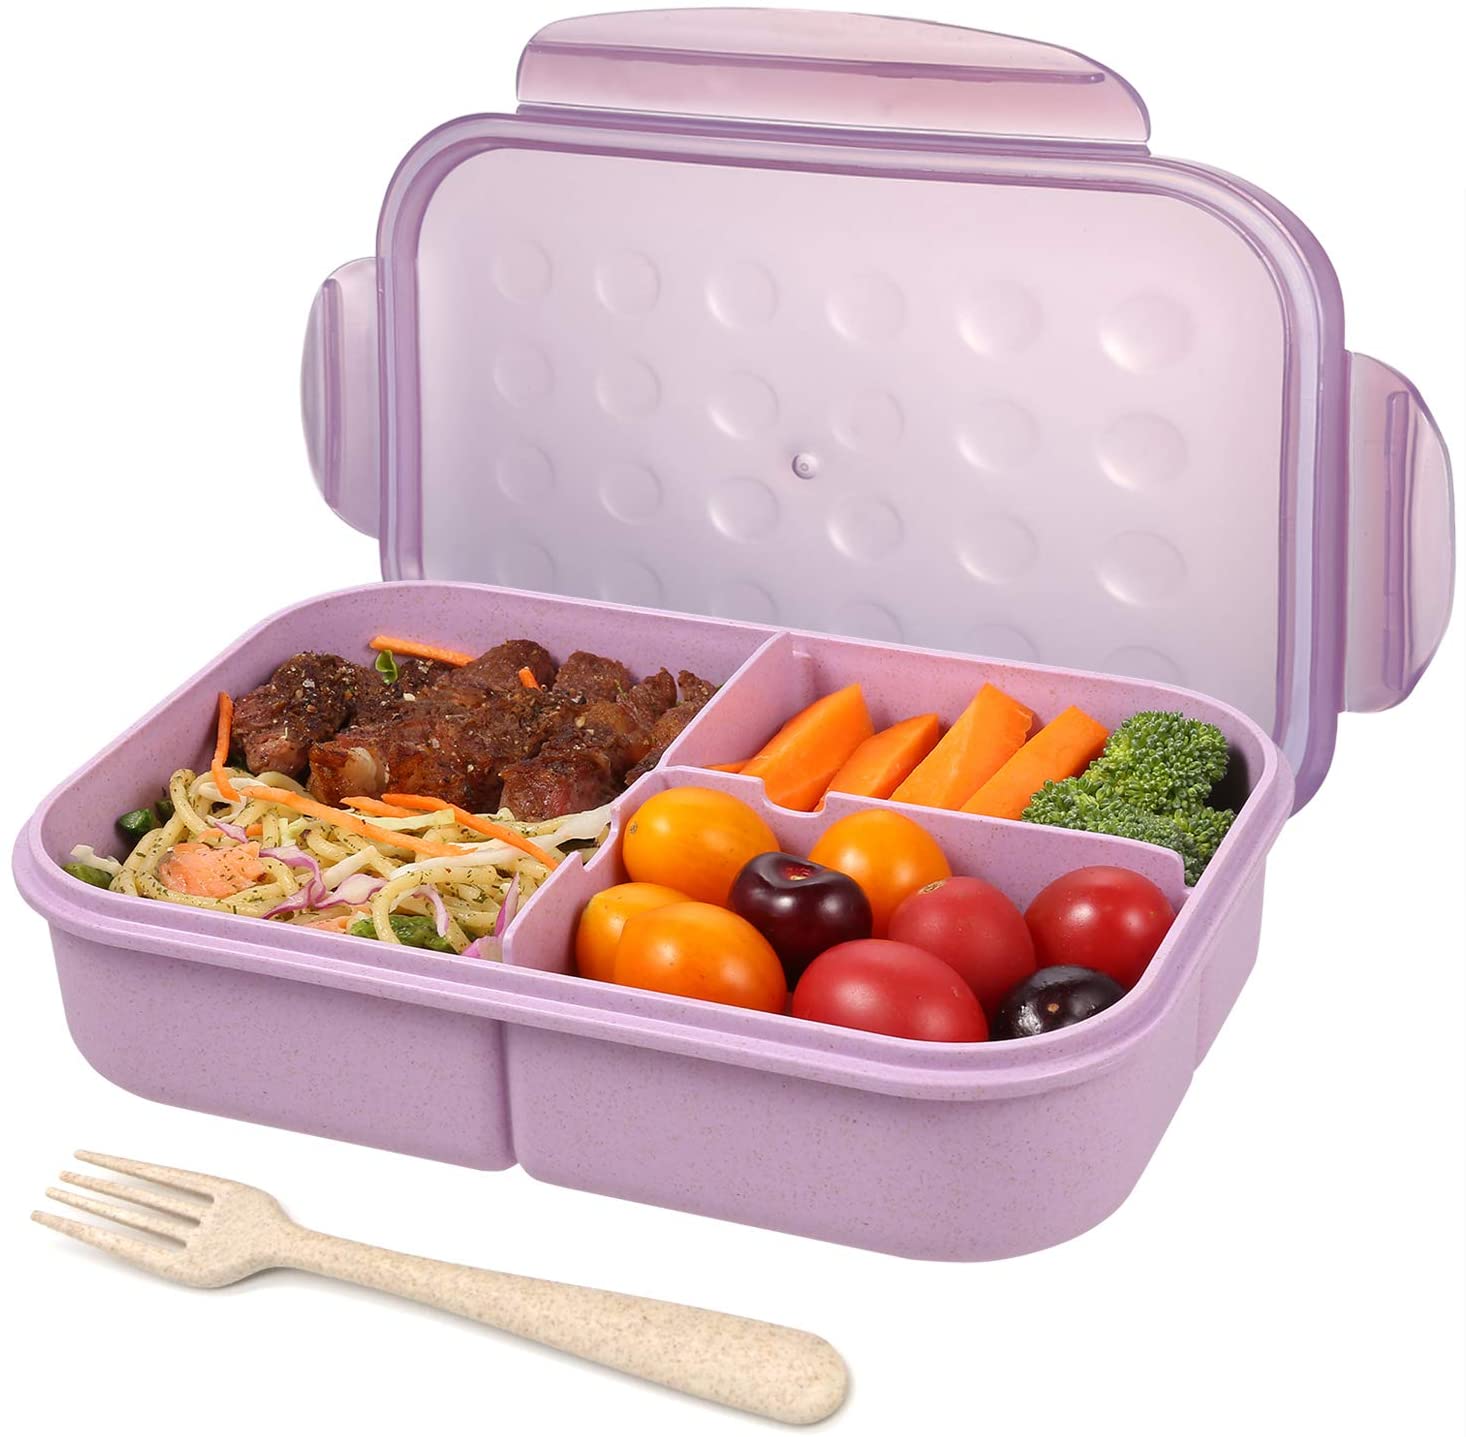 https://www.dontwasteyourmoney.com/wp-content/uploads/2020/09/jeopace-bento-lunchbox-flatware-for-kids.jpg